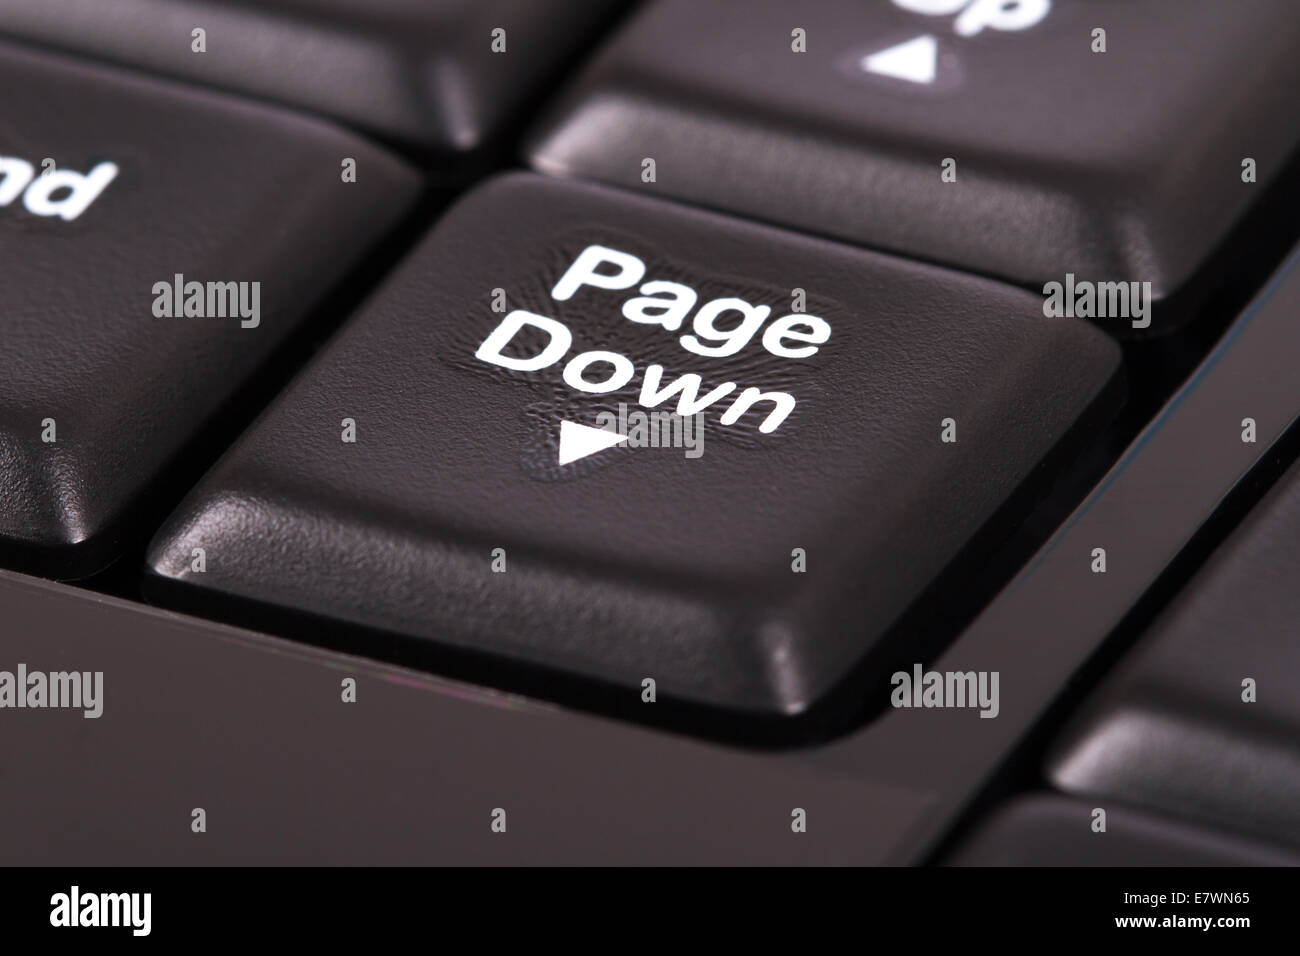 Page down key on black keyboard. Stock Photo